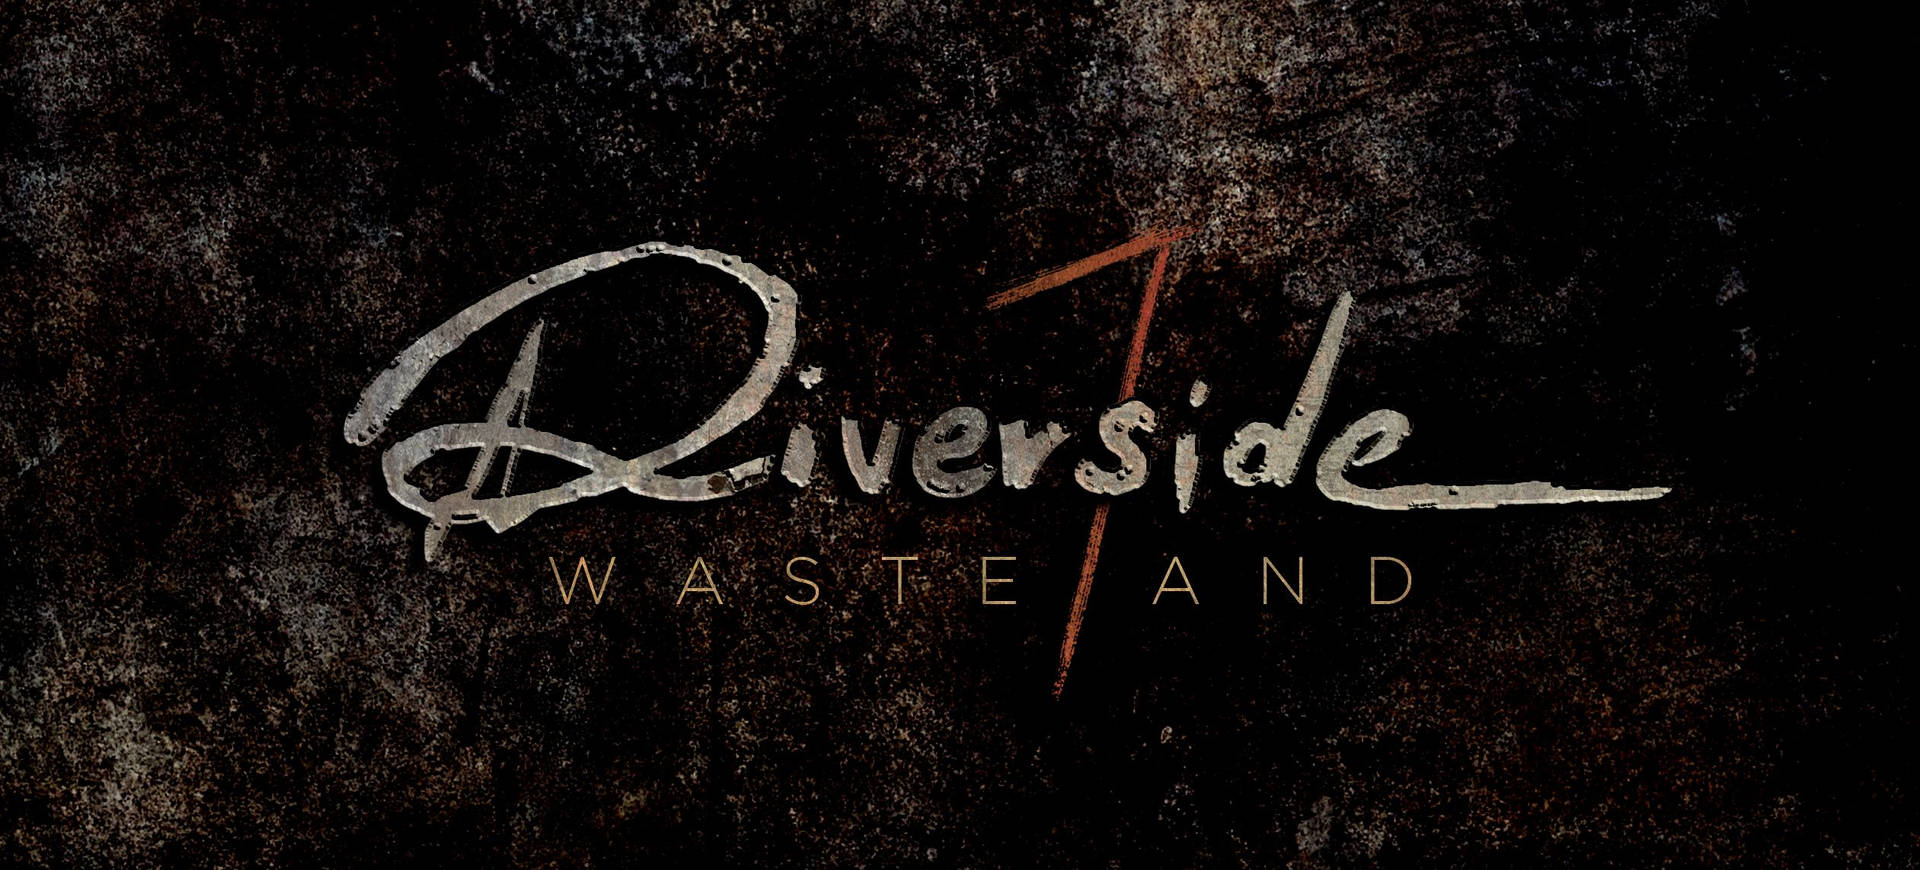 Riverside Rock Band Logo Black Background Wallpaper